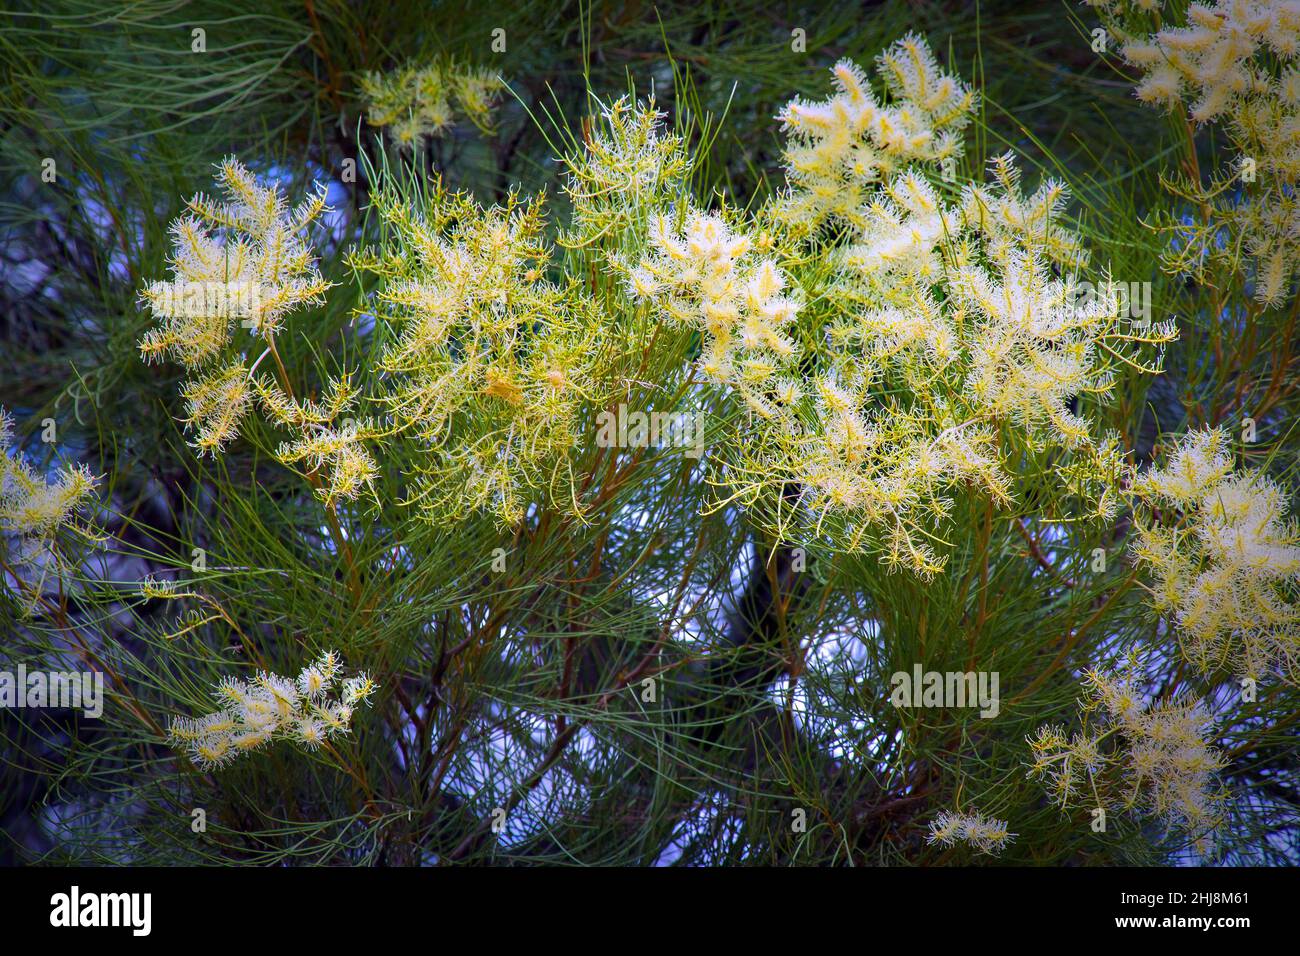 Grevillea Moonlight (grevillea whiteana) flowering in Gobi Desert, WA, Australia. Stock Photo